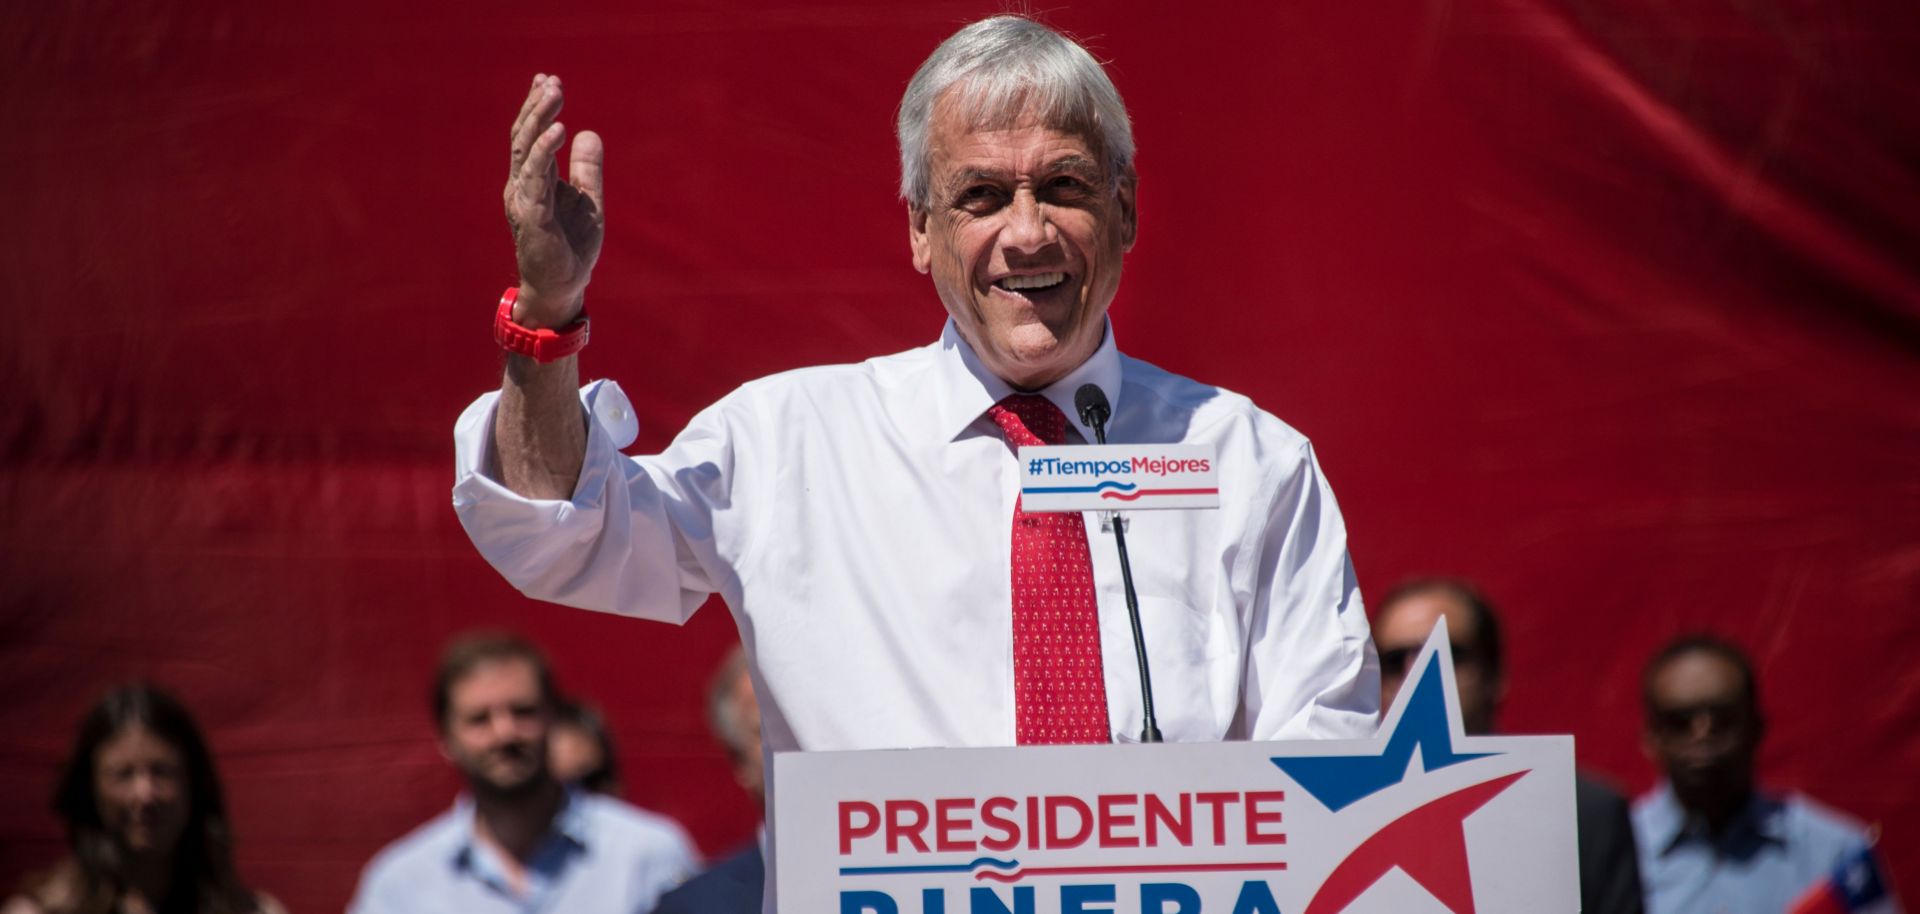 Chilean presidential candidate Sebastian Pinera